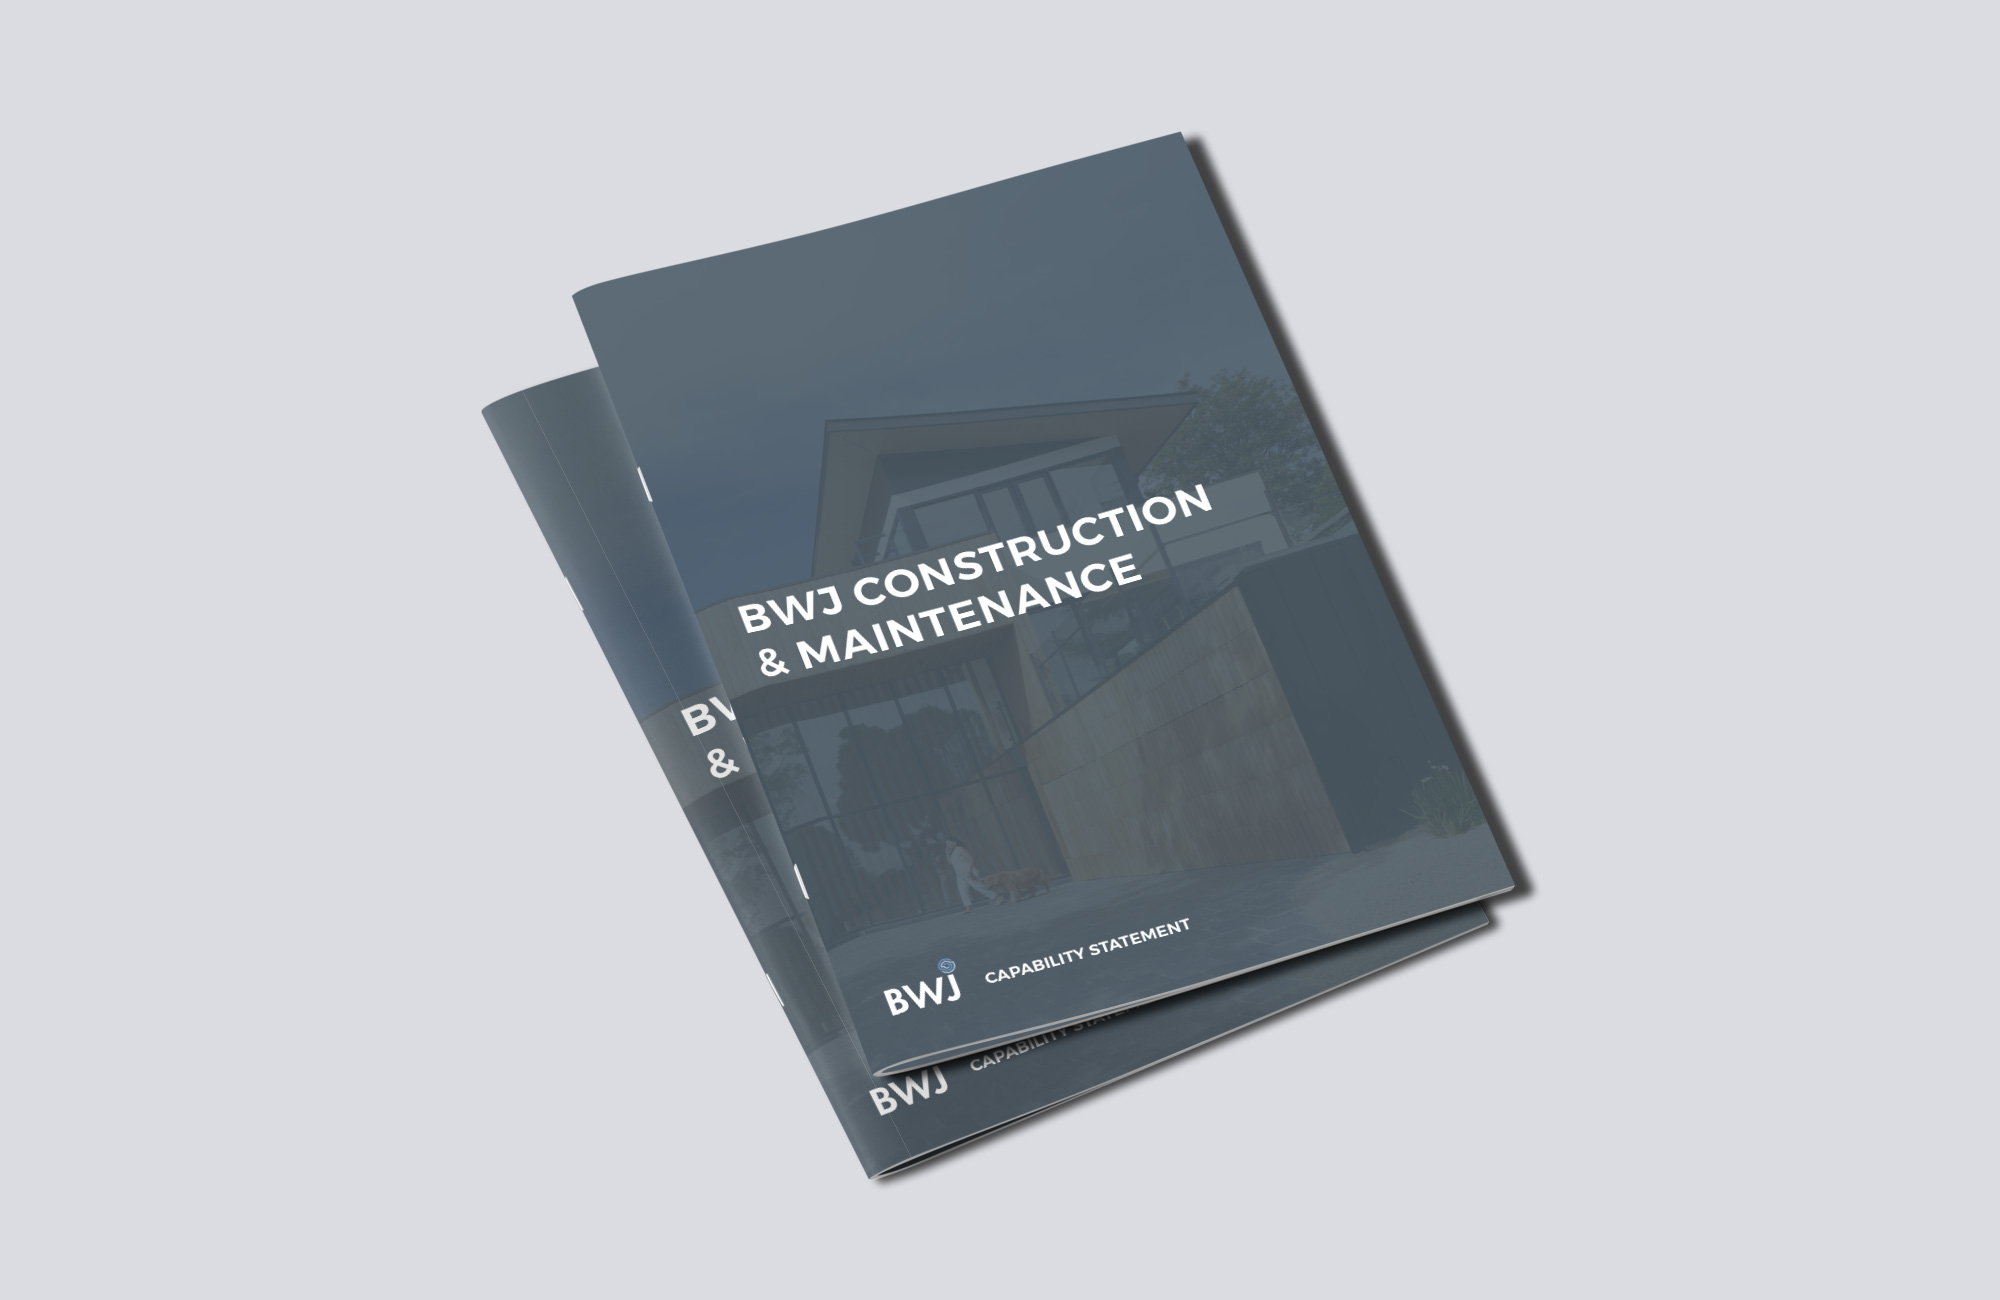 BWJ Construction & Maintenance